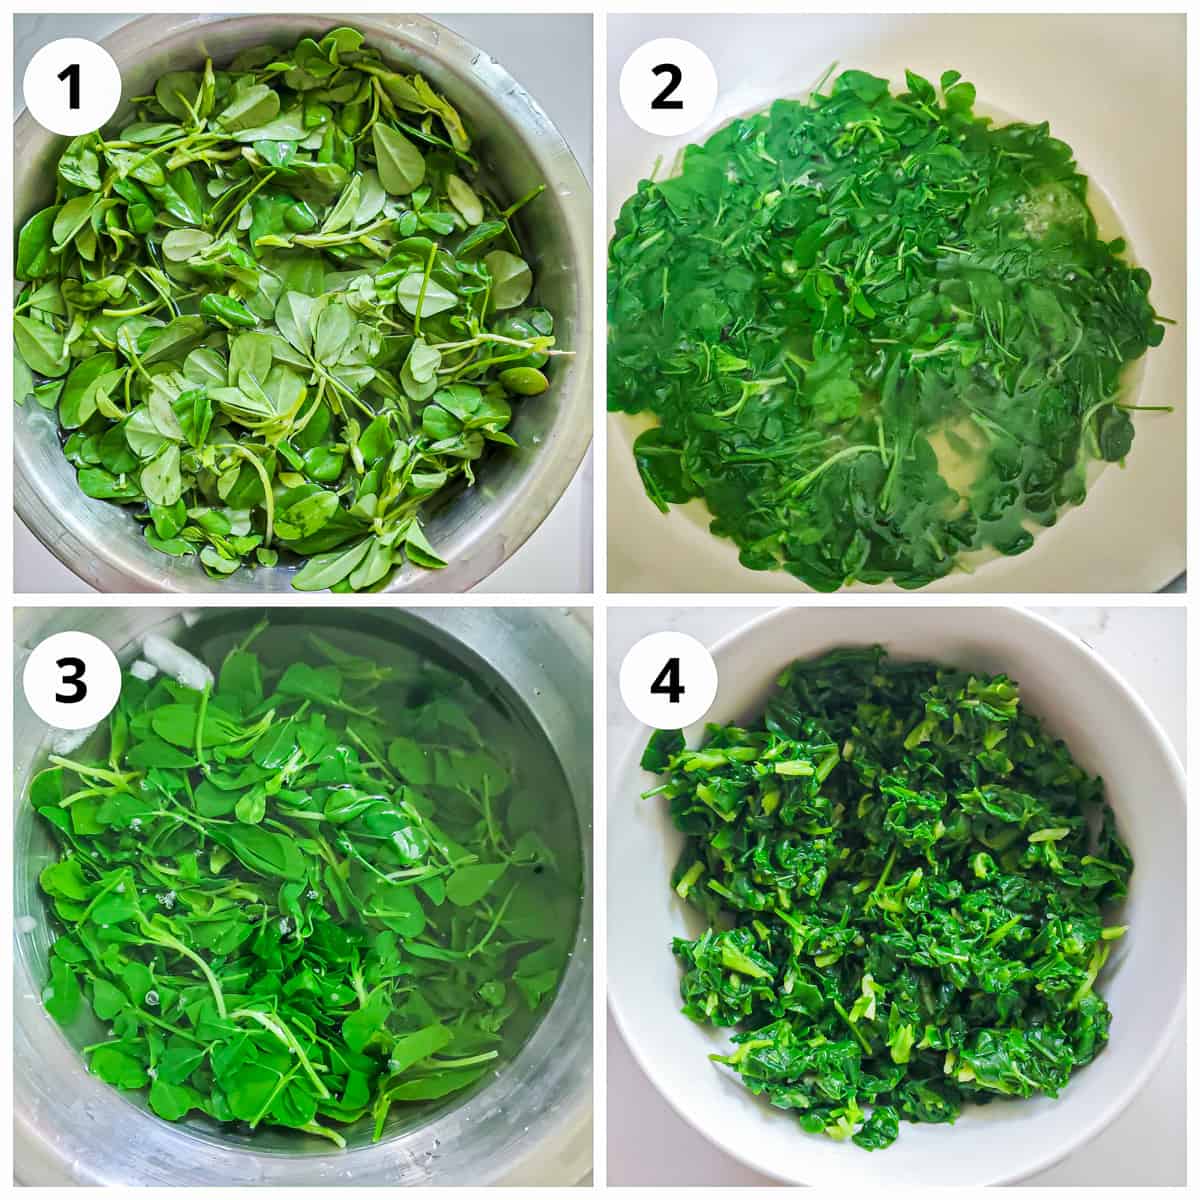 Steps for blanching Methi (fenugreek leaves)